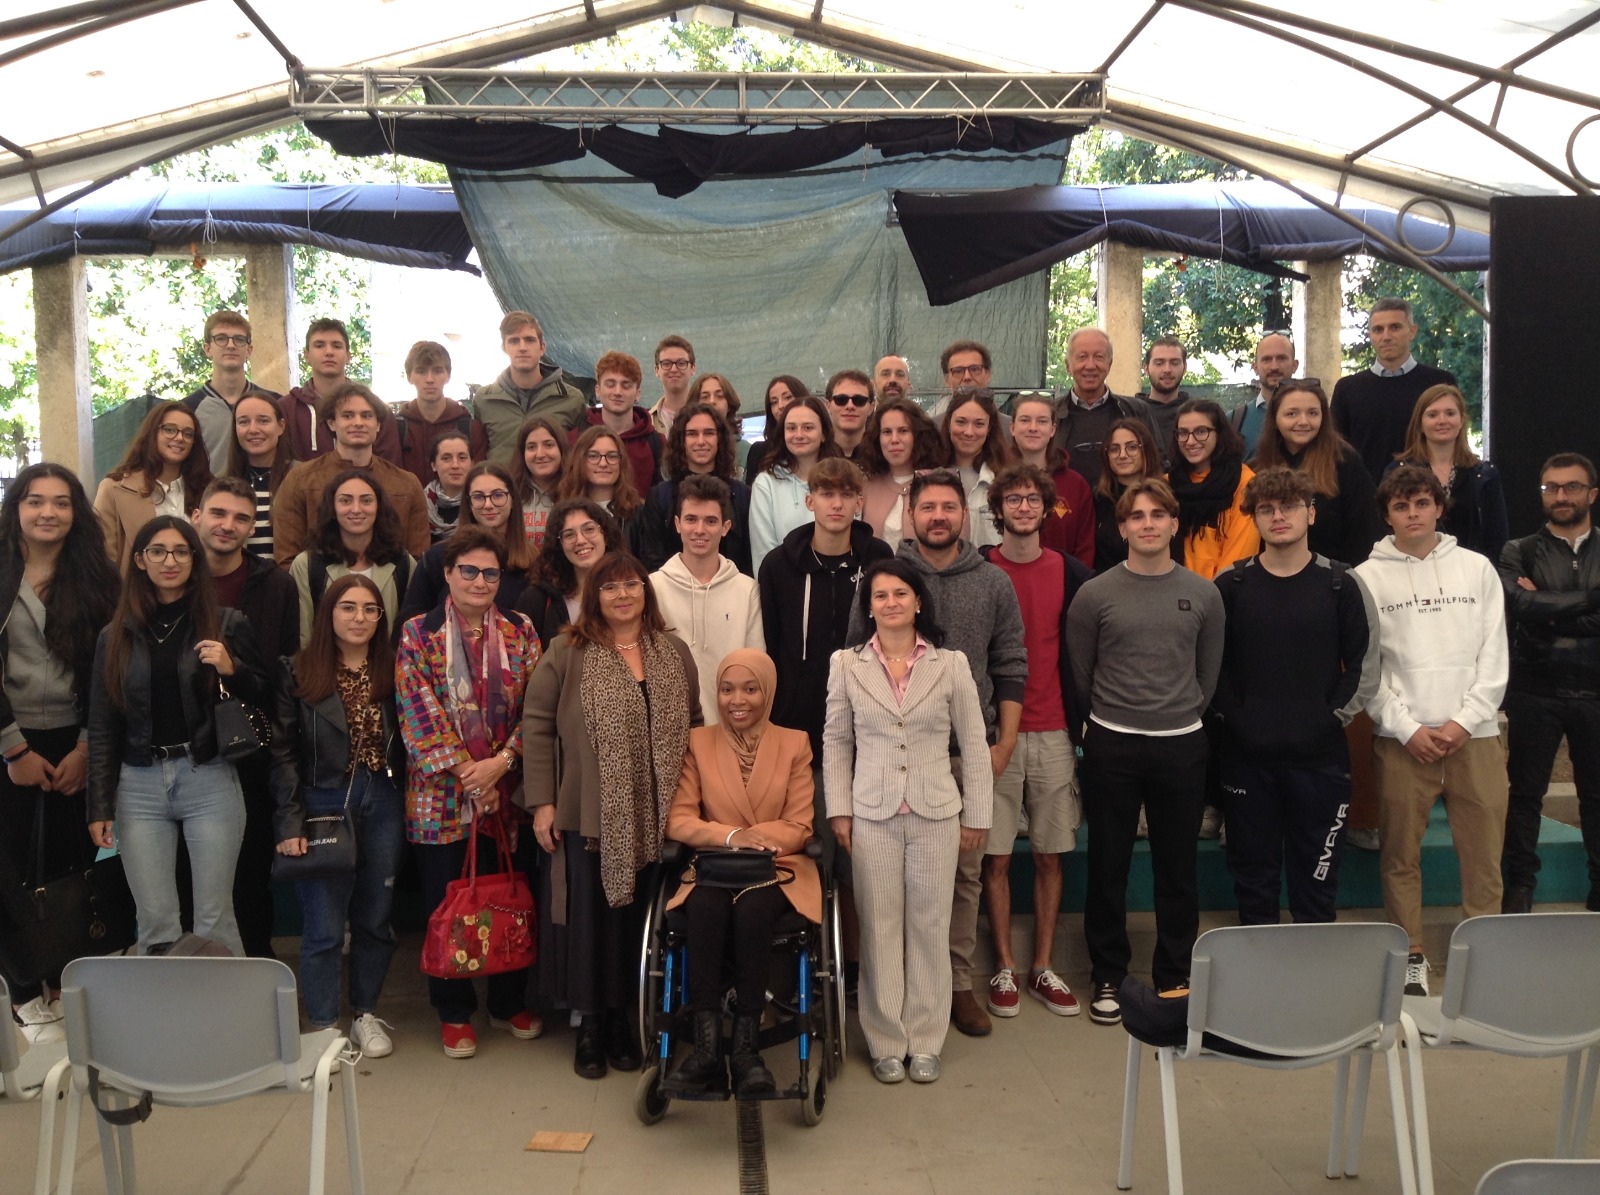 Summer Camp a Mirandola, 40 studenti in visita alla “Biomedical Valley”